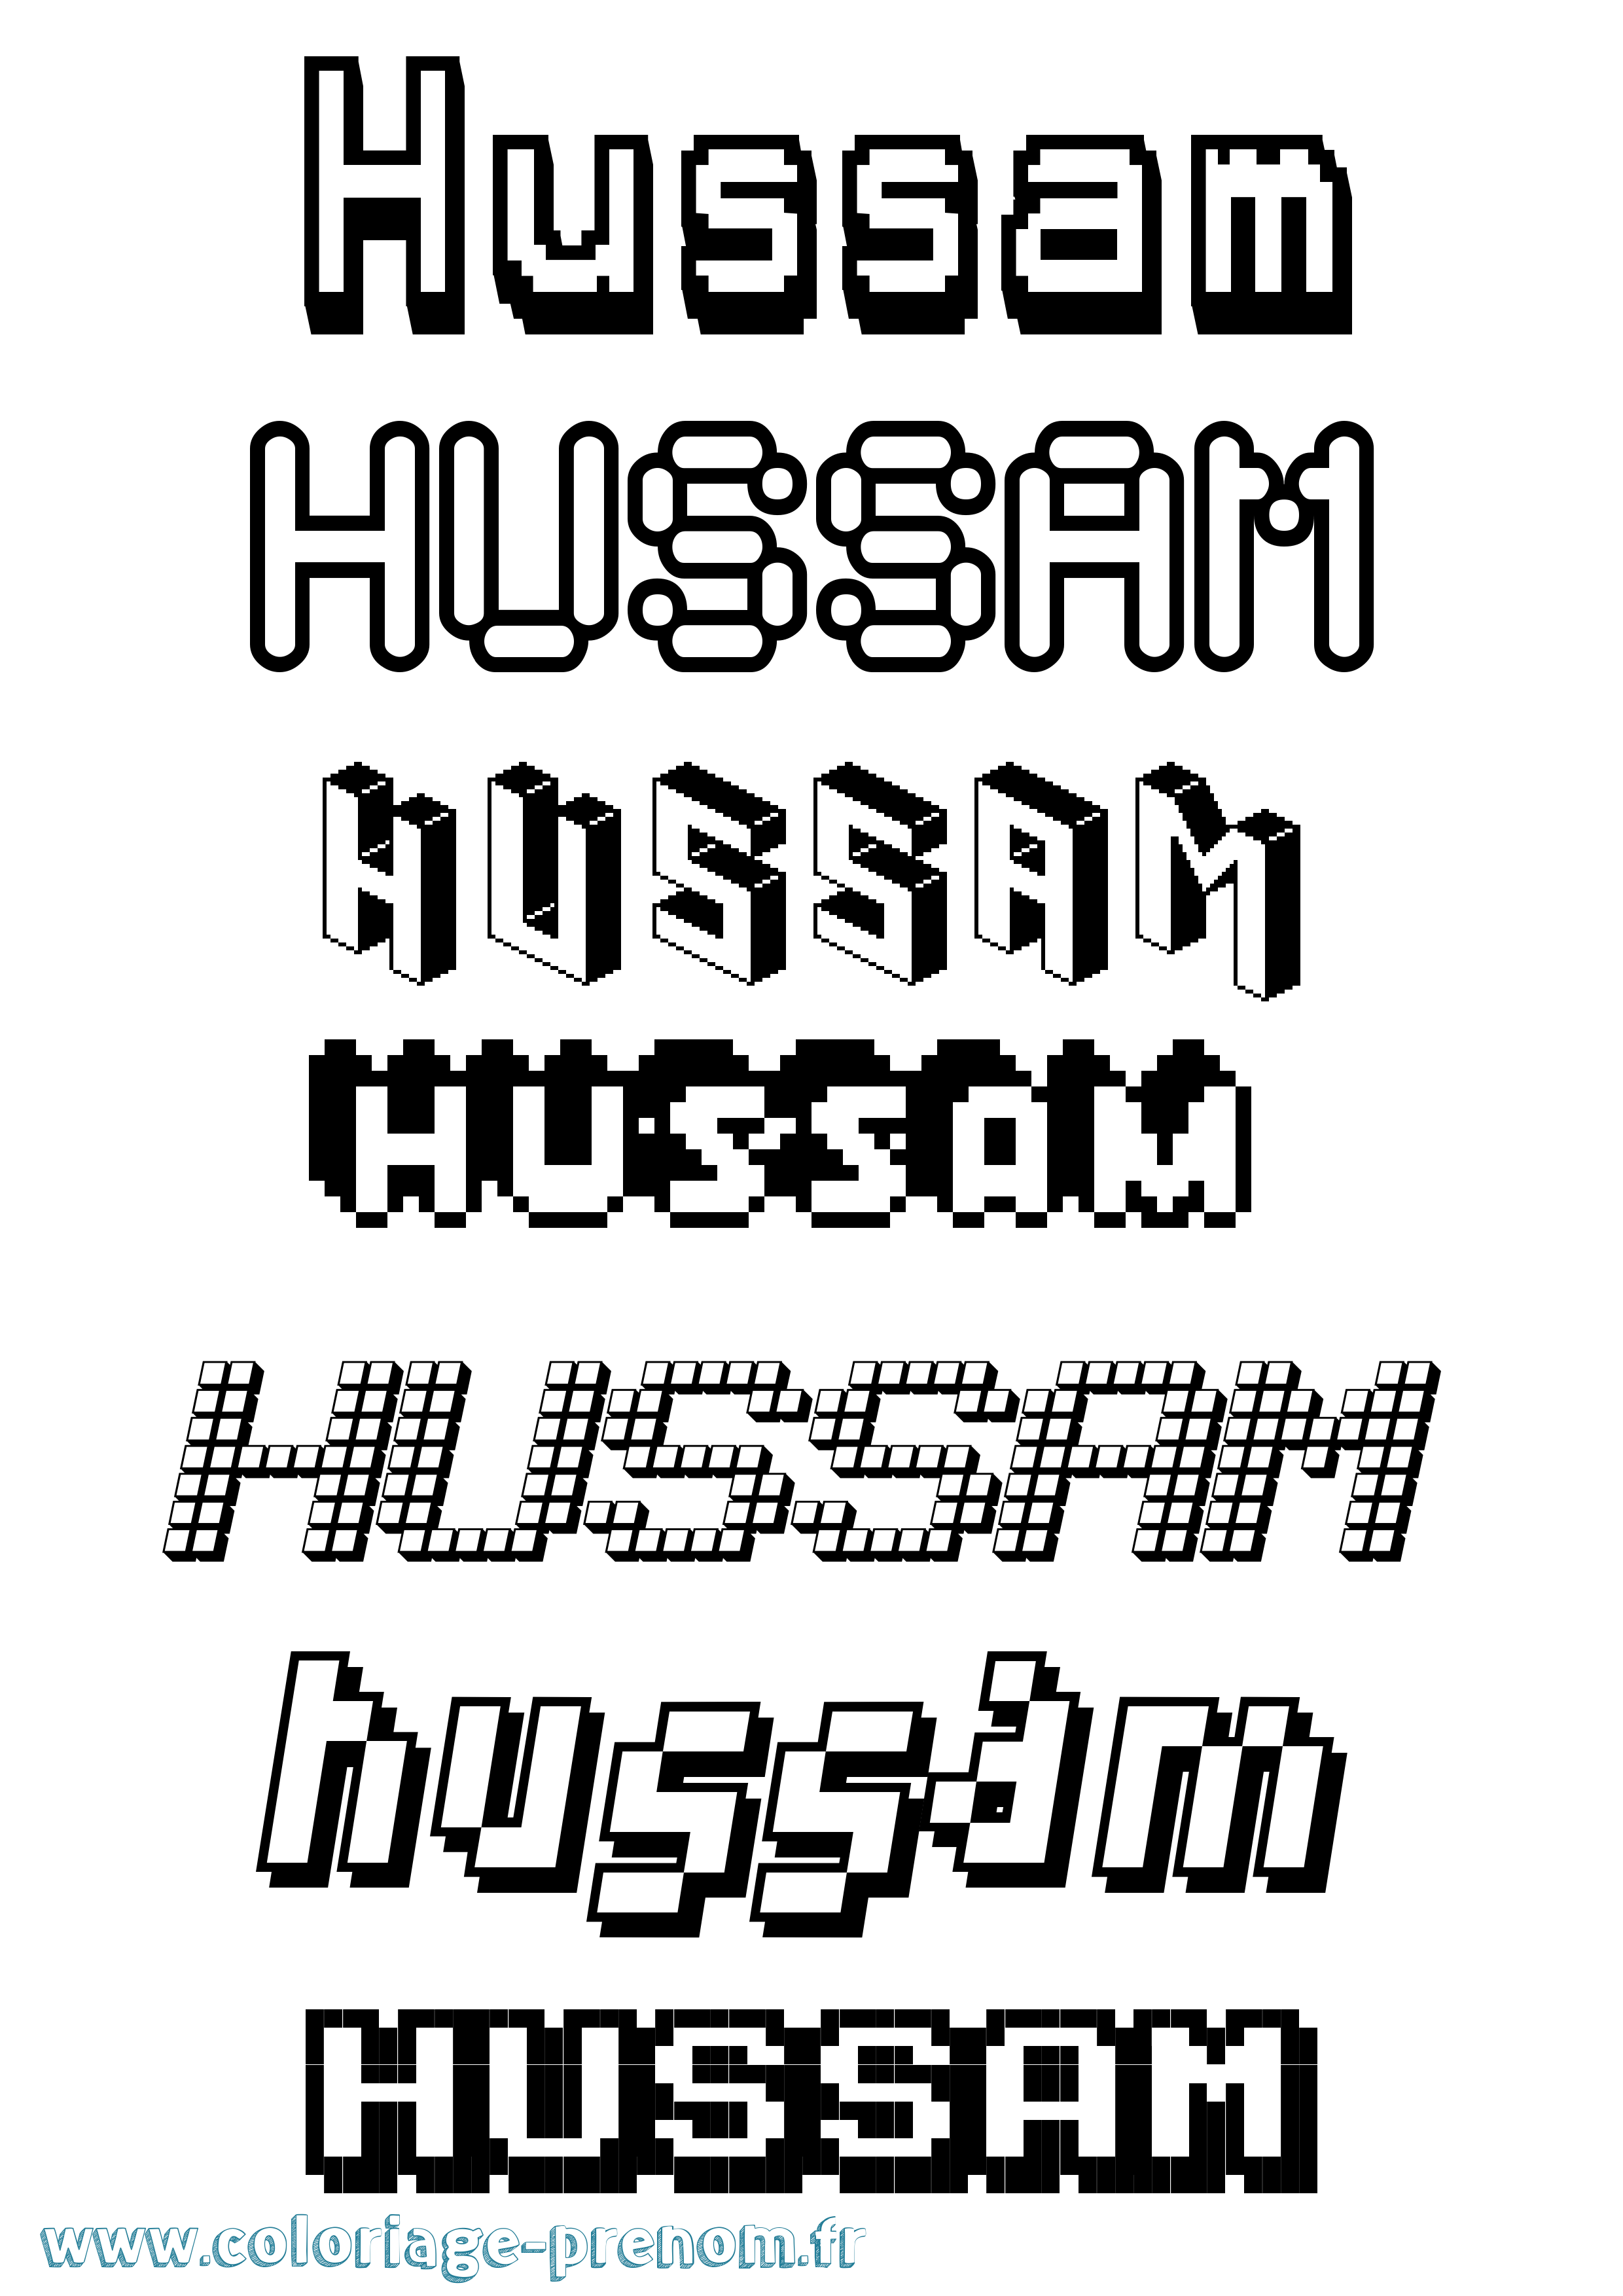 Coloriage prénom Hussam Pixel